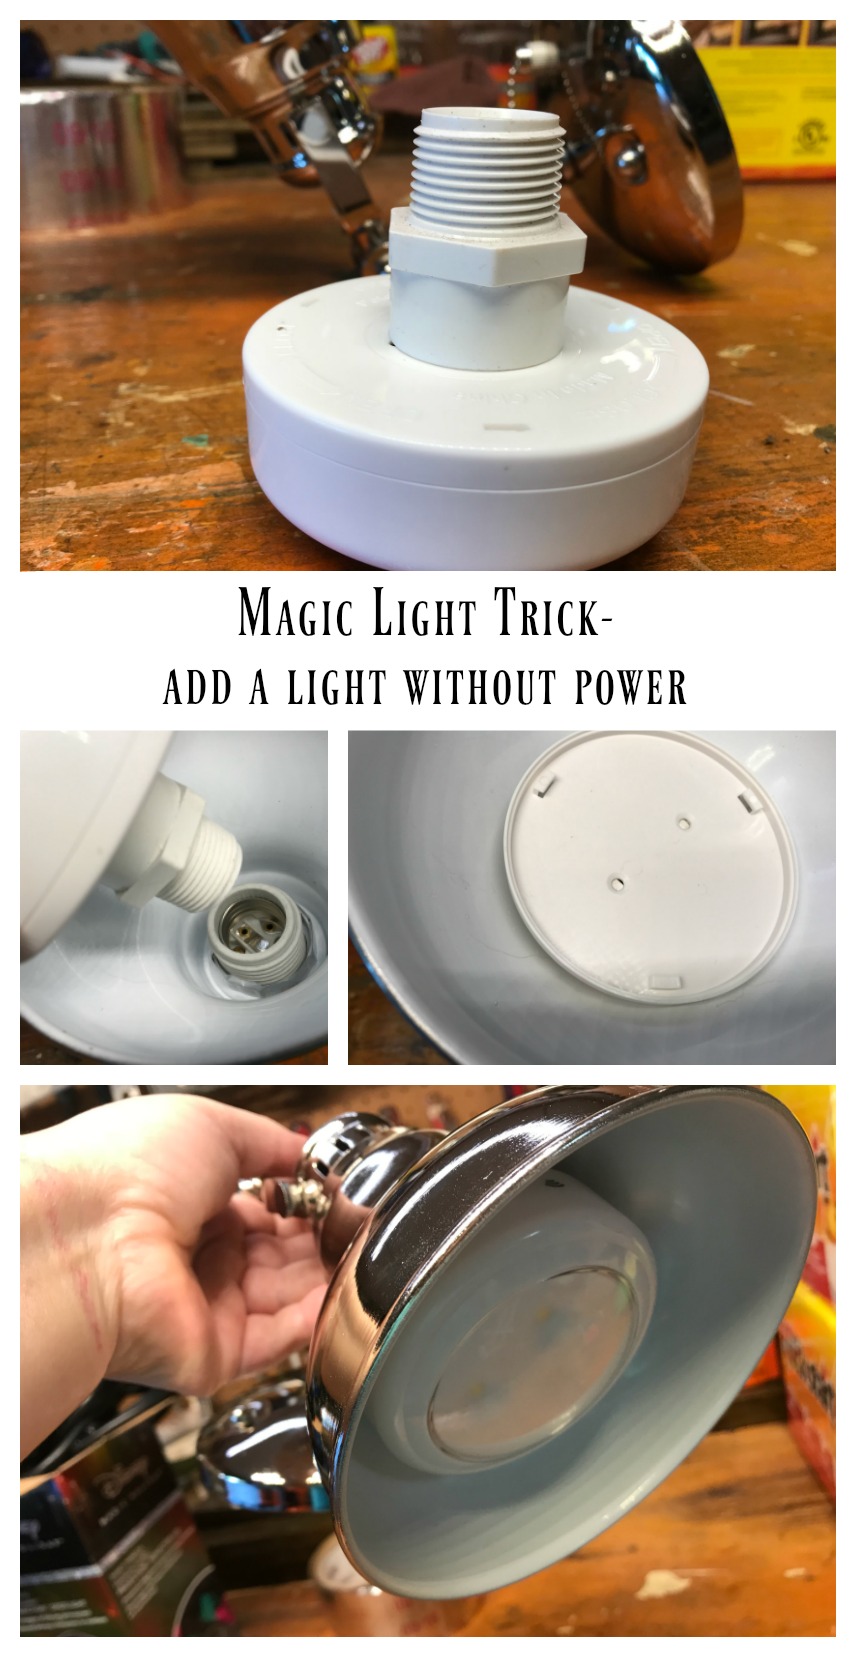 Magic Light Trick- Add a light without power